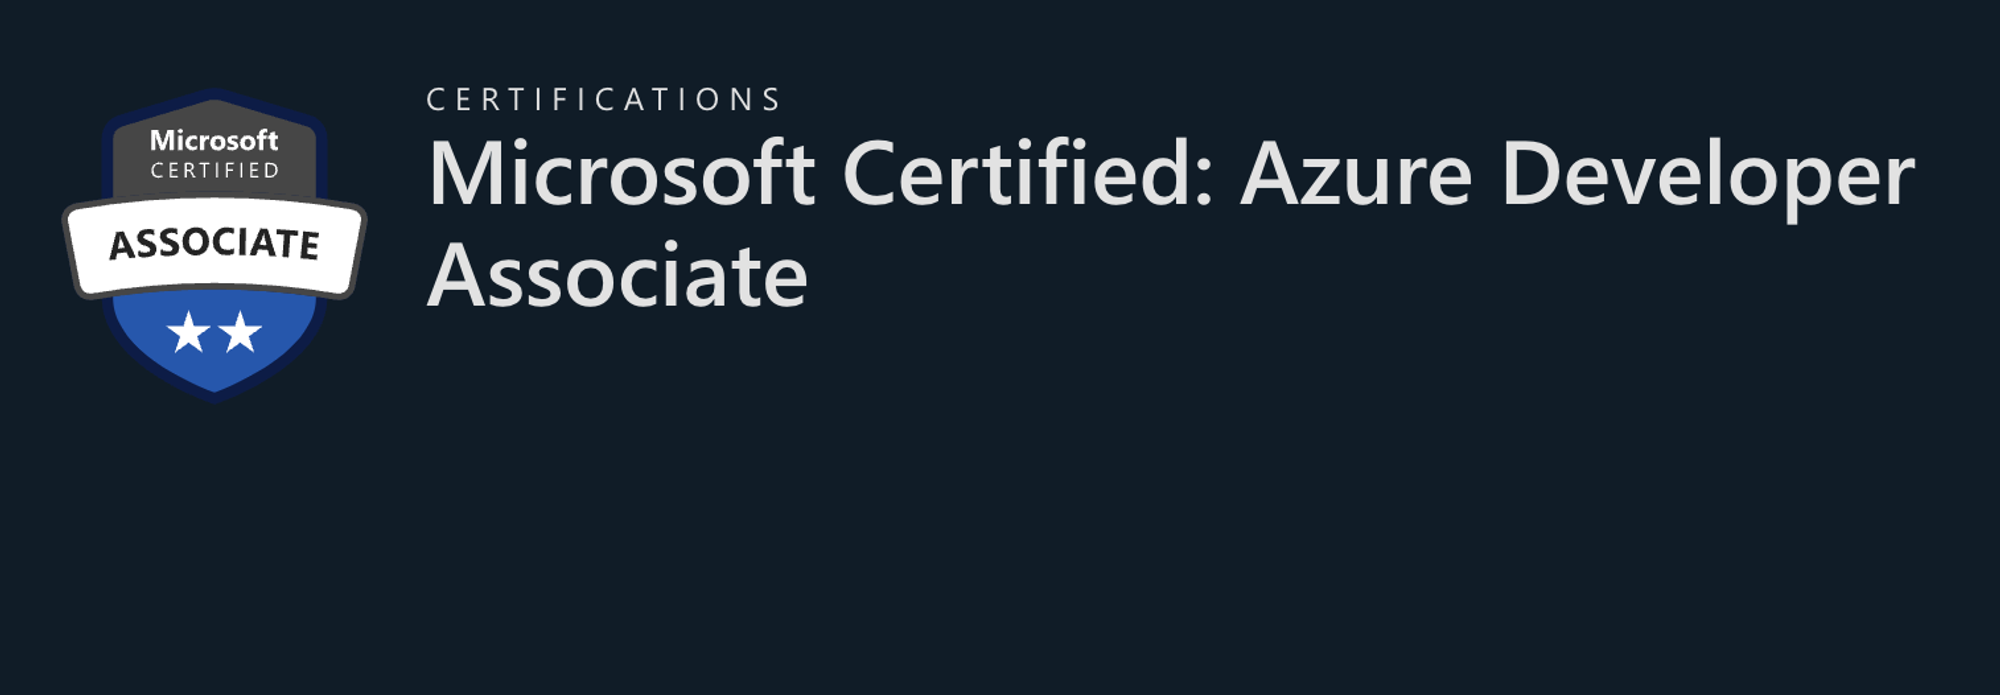 How to become a Microsoft Certified: Azure Developer Associate